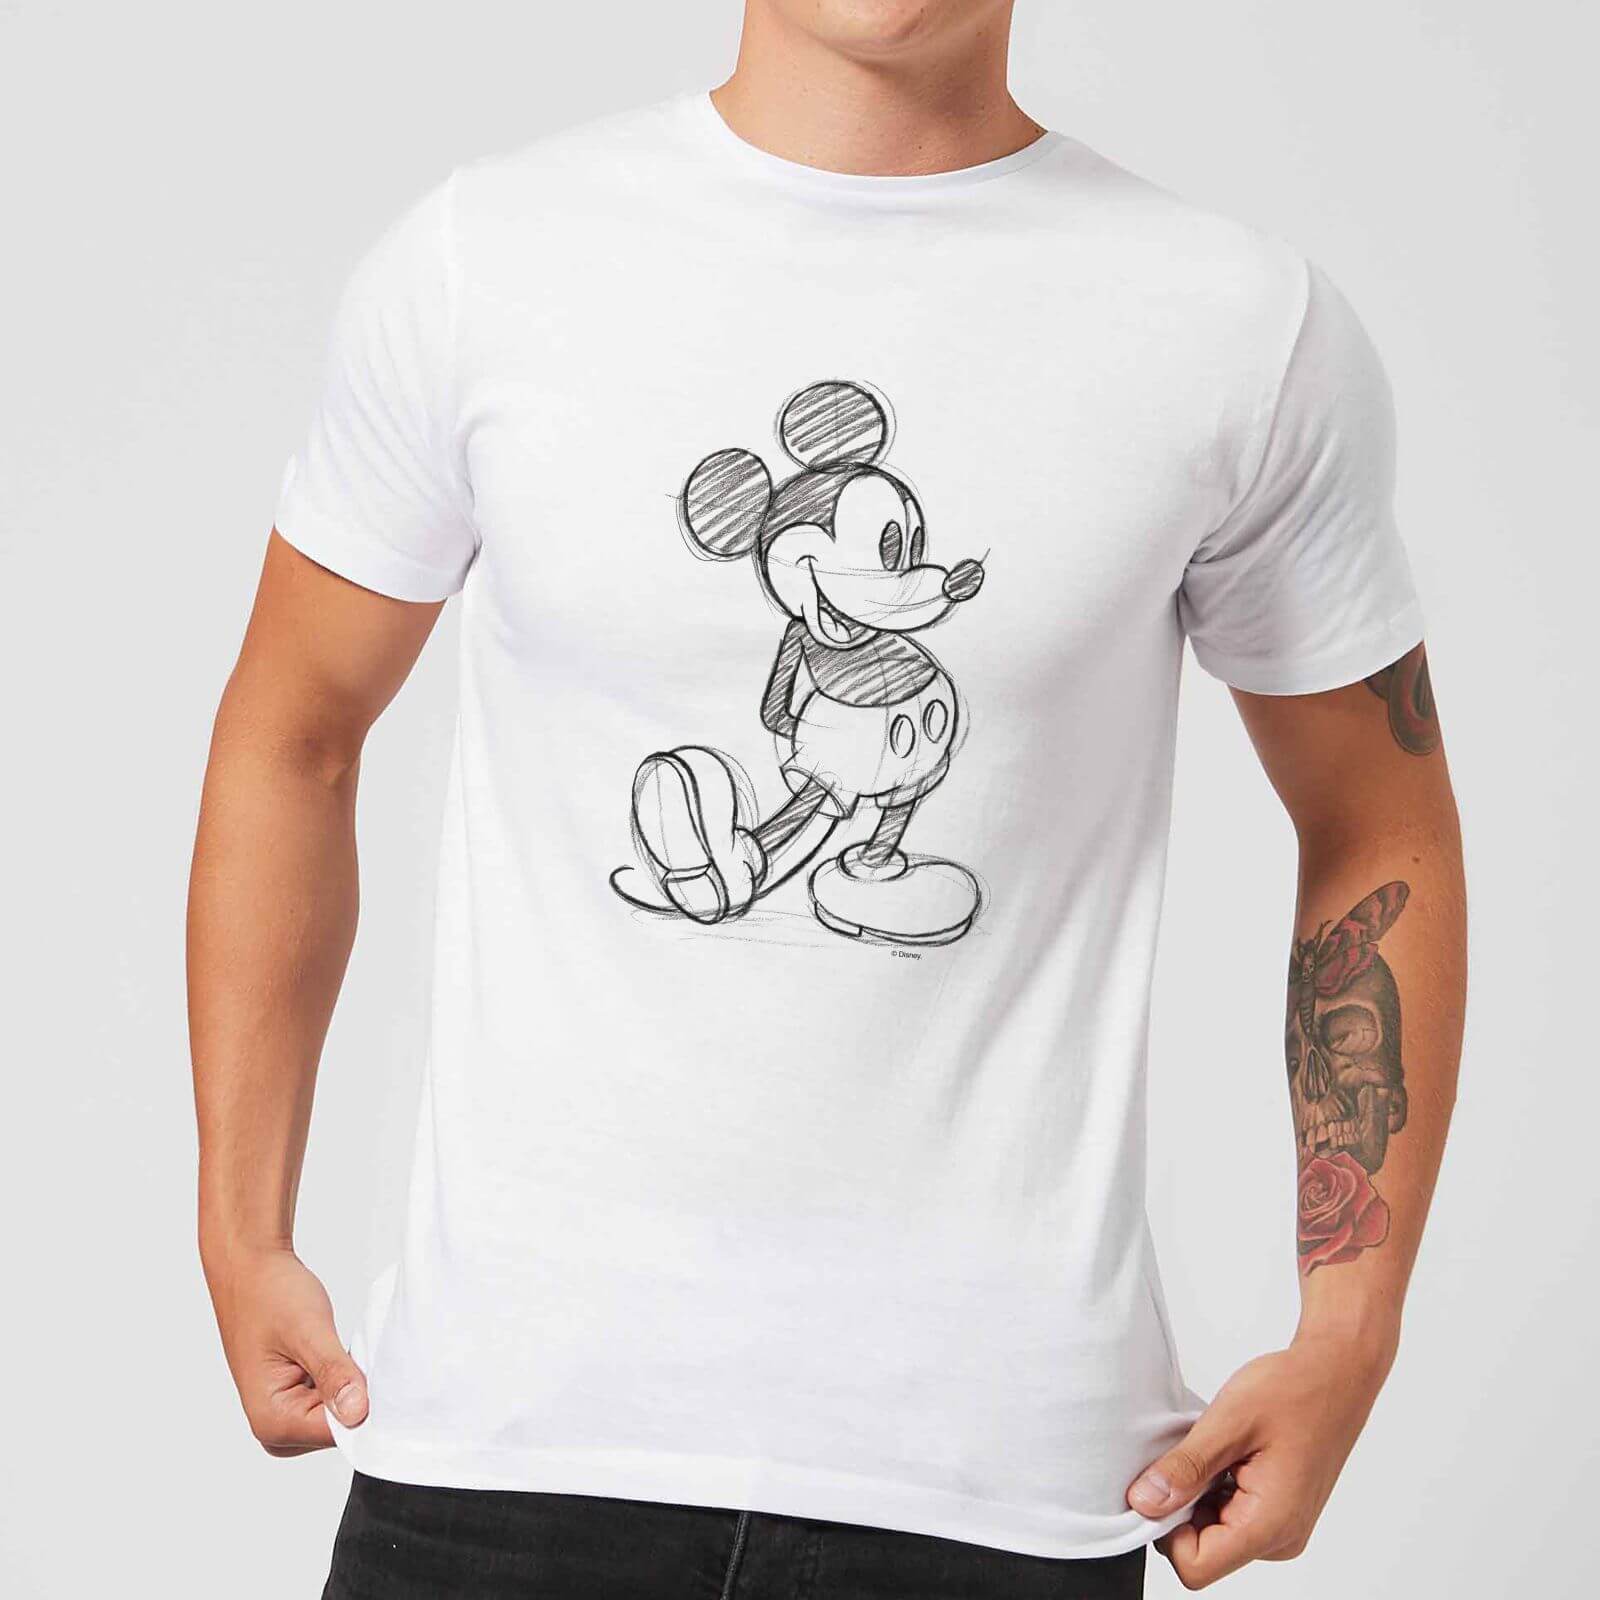 Disney Mickey Mouse Sketch Men's T-Shirt - White - S